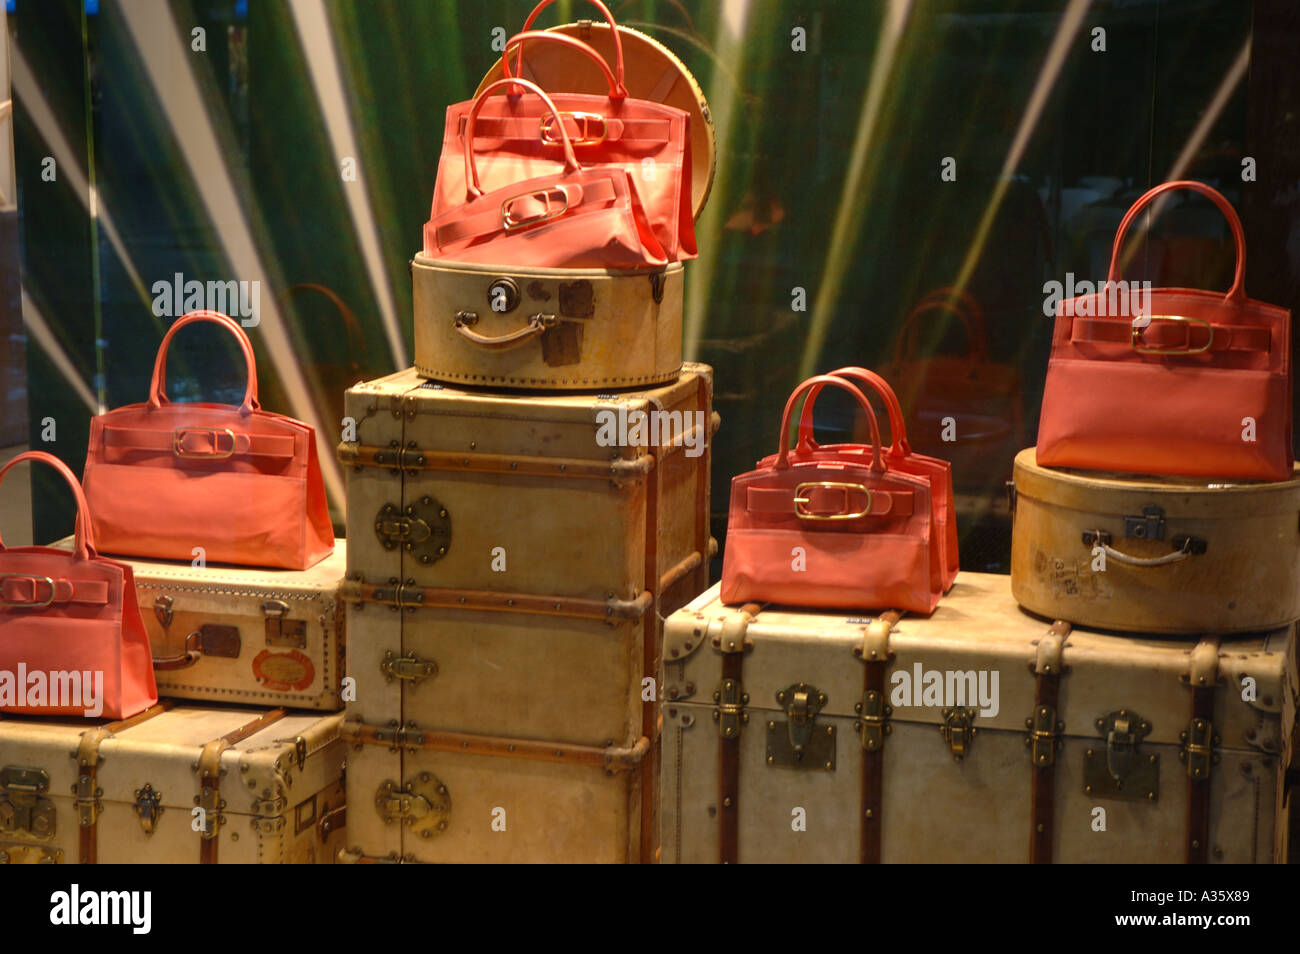 Designer luggage in fashion shop window display in Milan Stock Photo